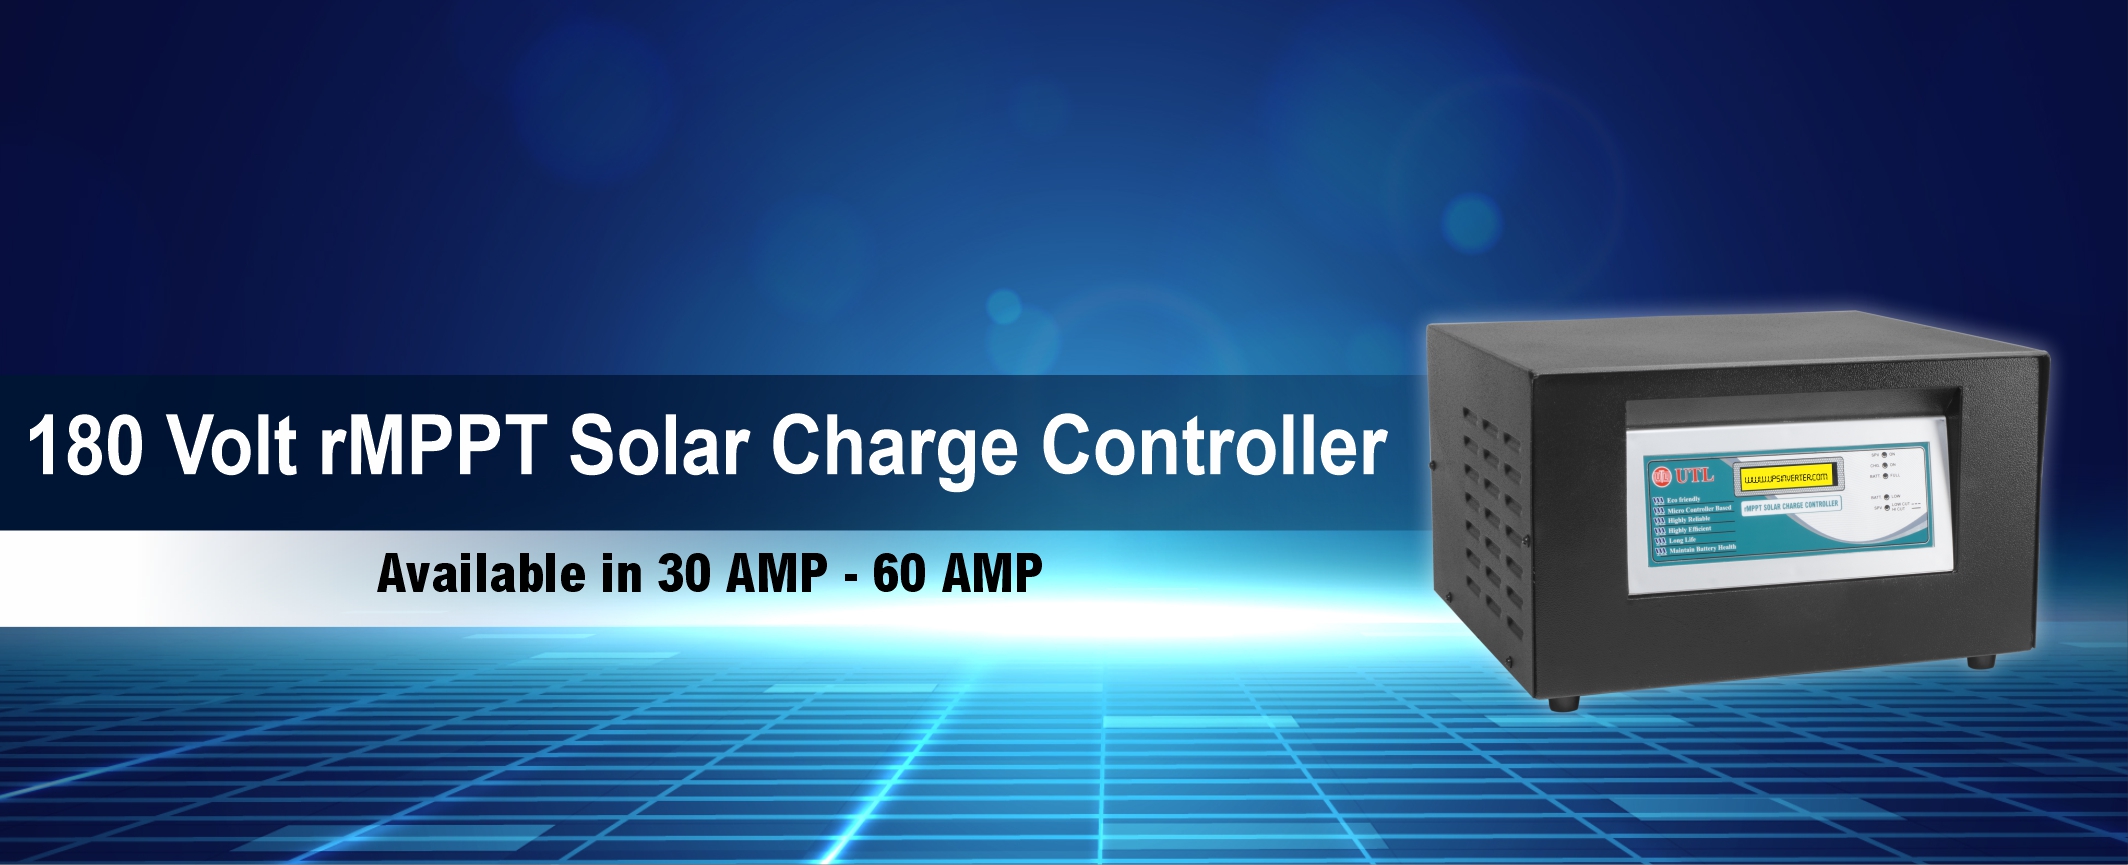 180 volt Solar Charge Controller